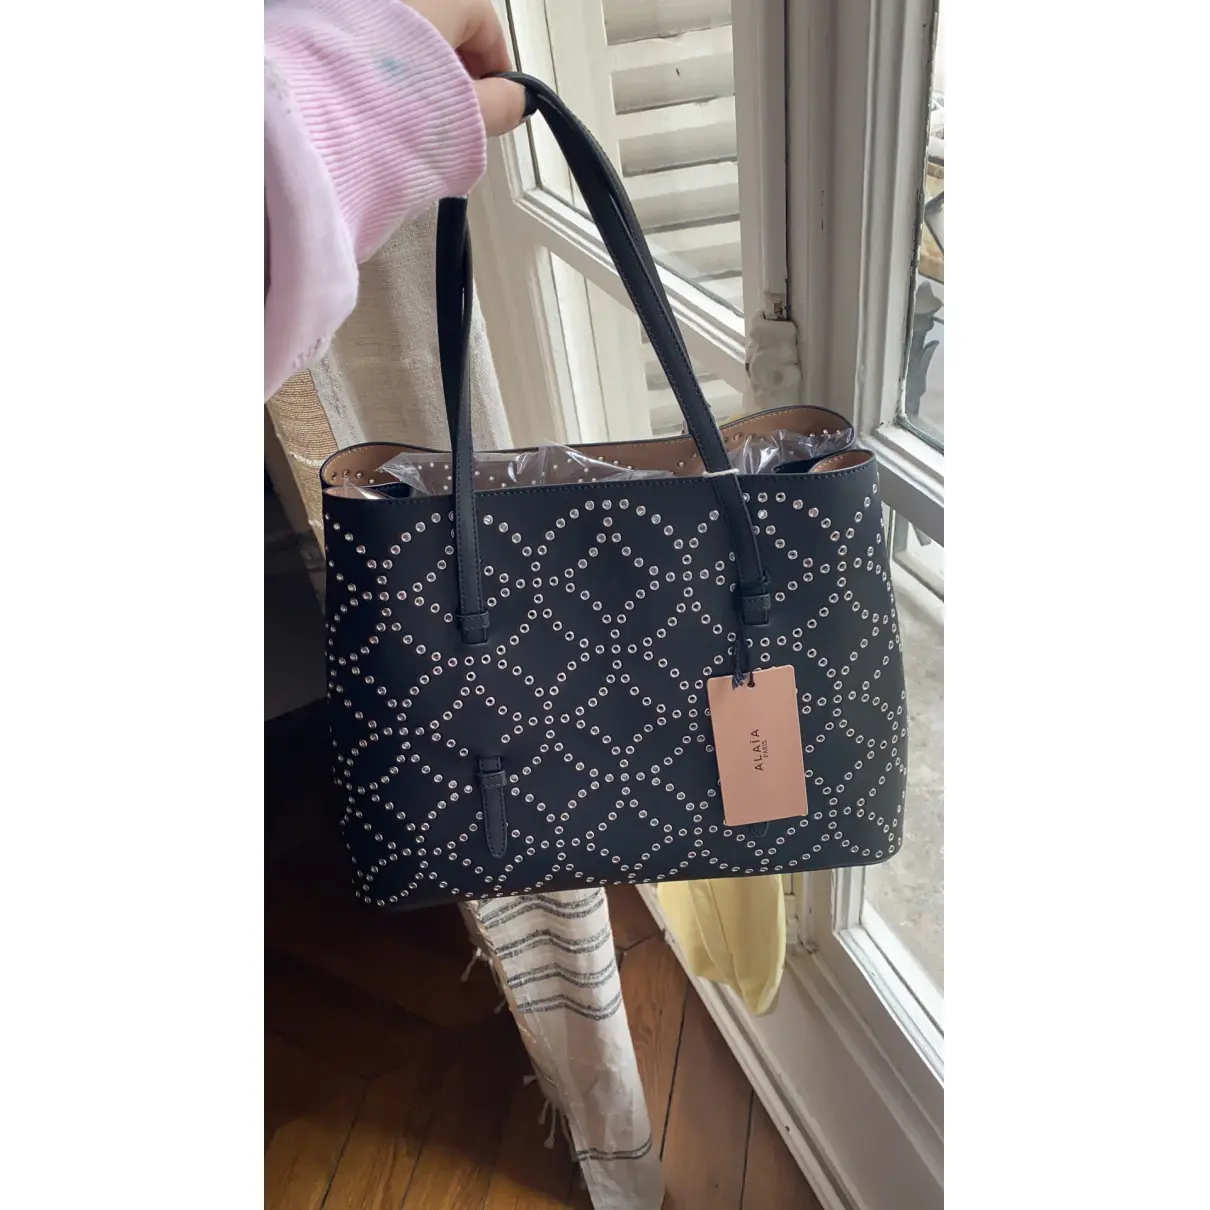 Buy Alaïa Leather handbag online